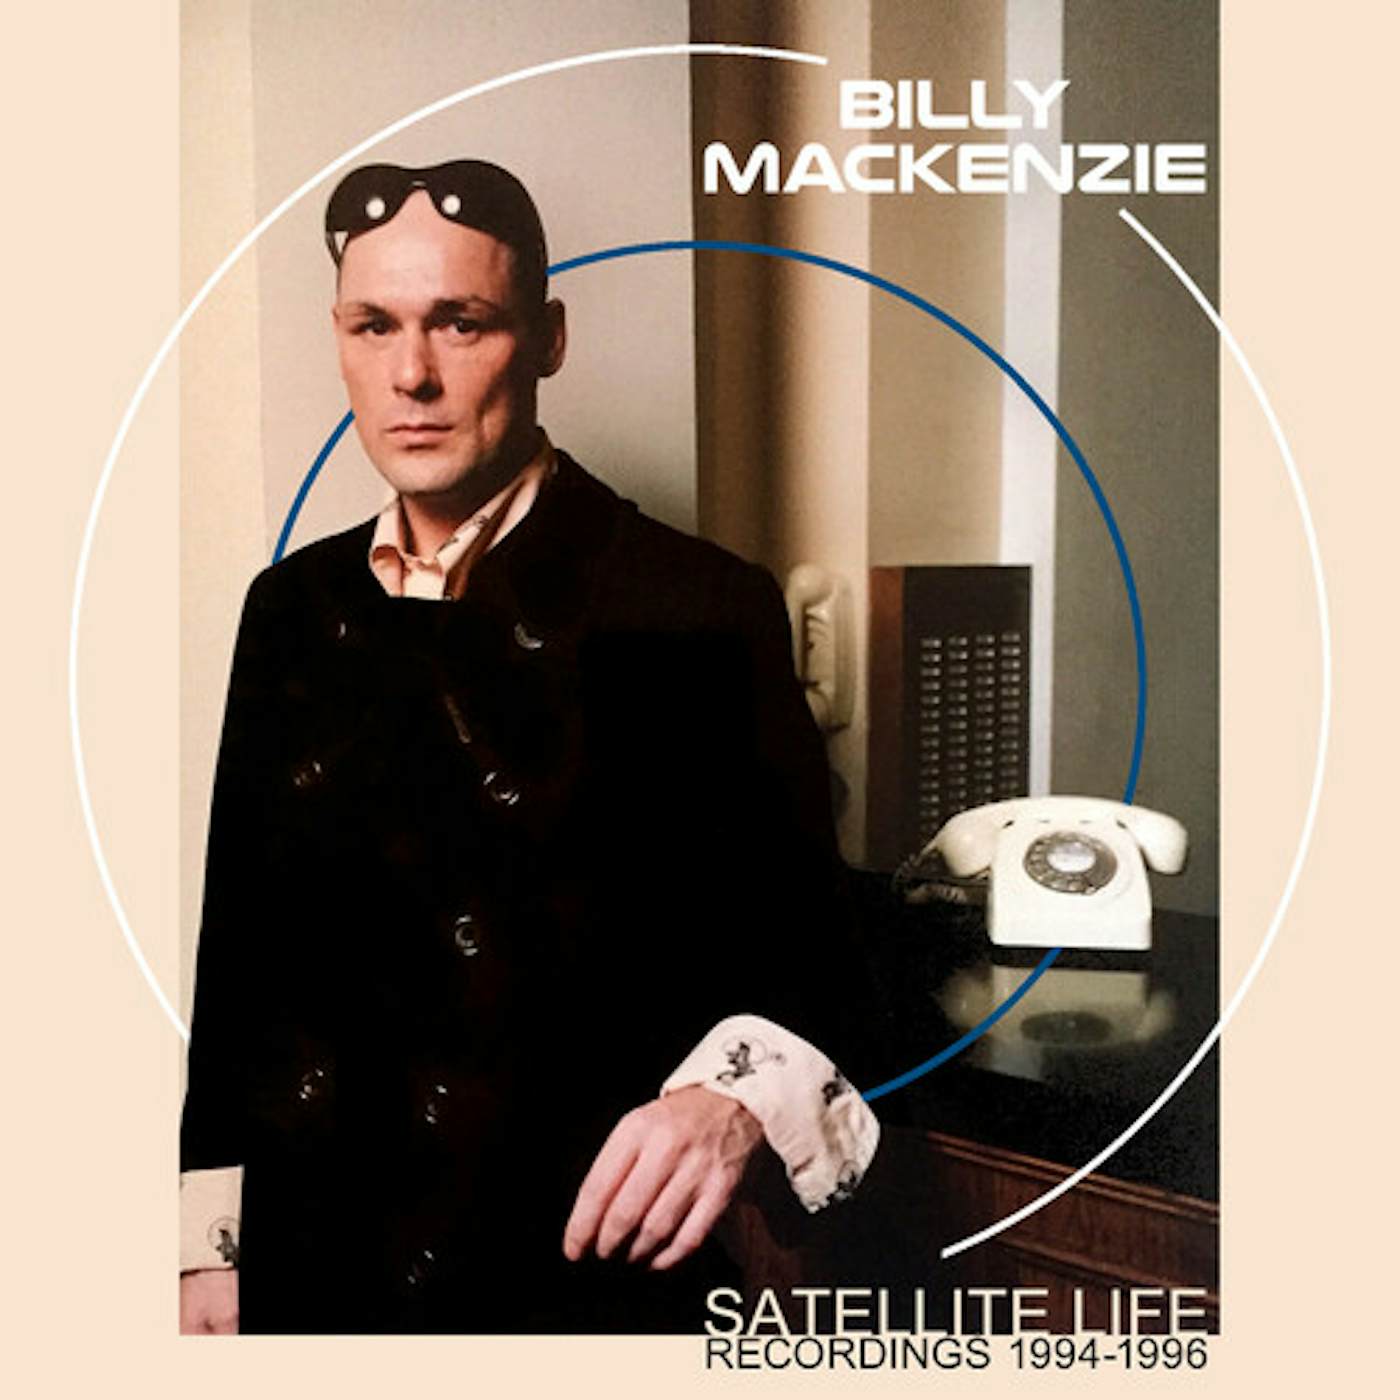 Billy Mackenzie SATELLITE LIFE: RECORDINGS 1994-1996 CD